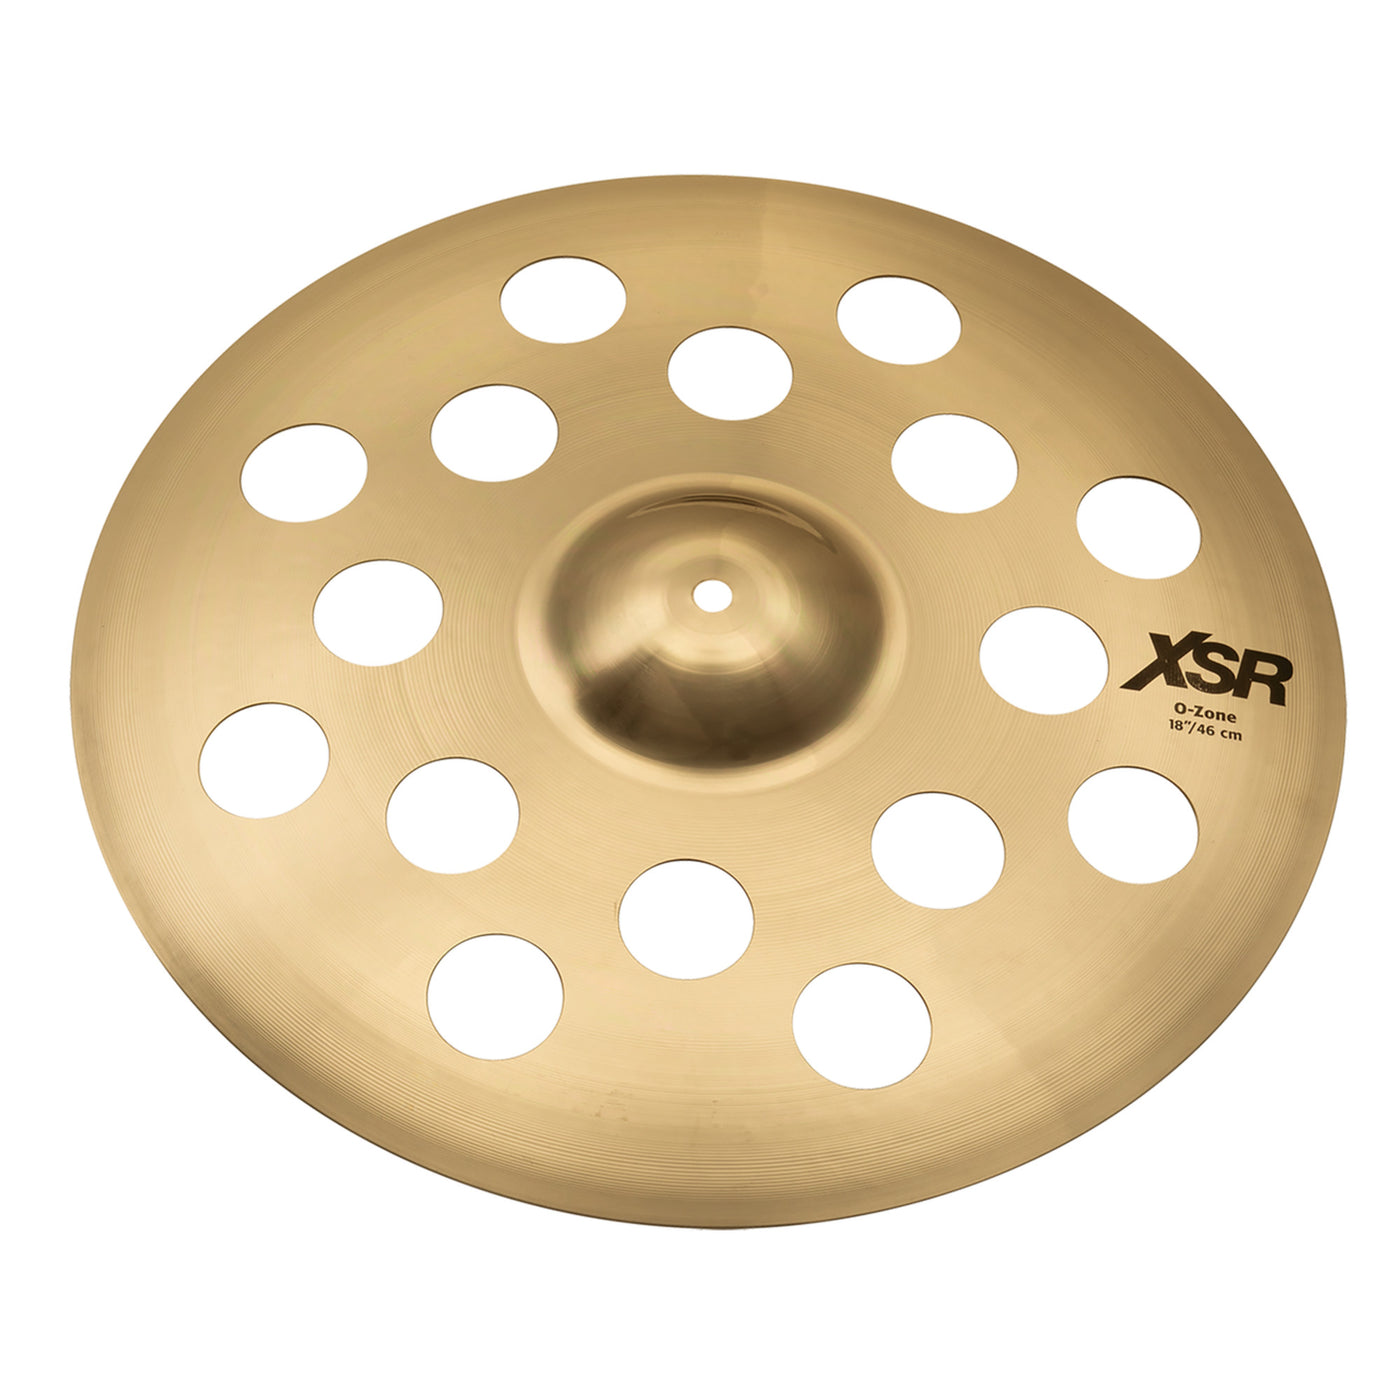 Sabian 18" XSR O-Zone Crash Cymbal - Brilliant Finish